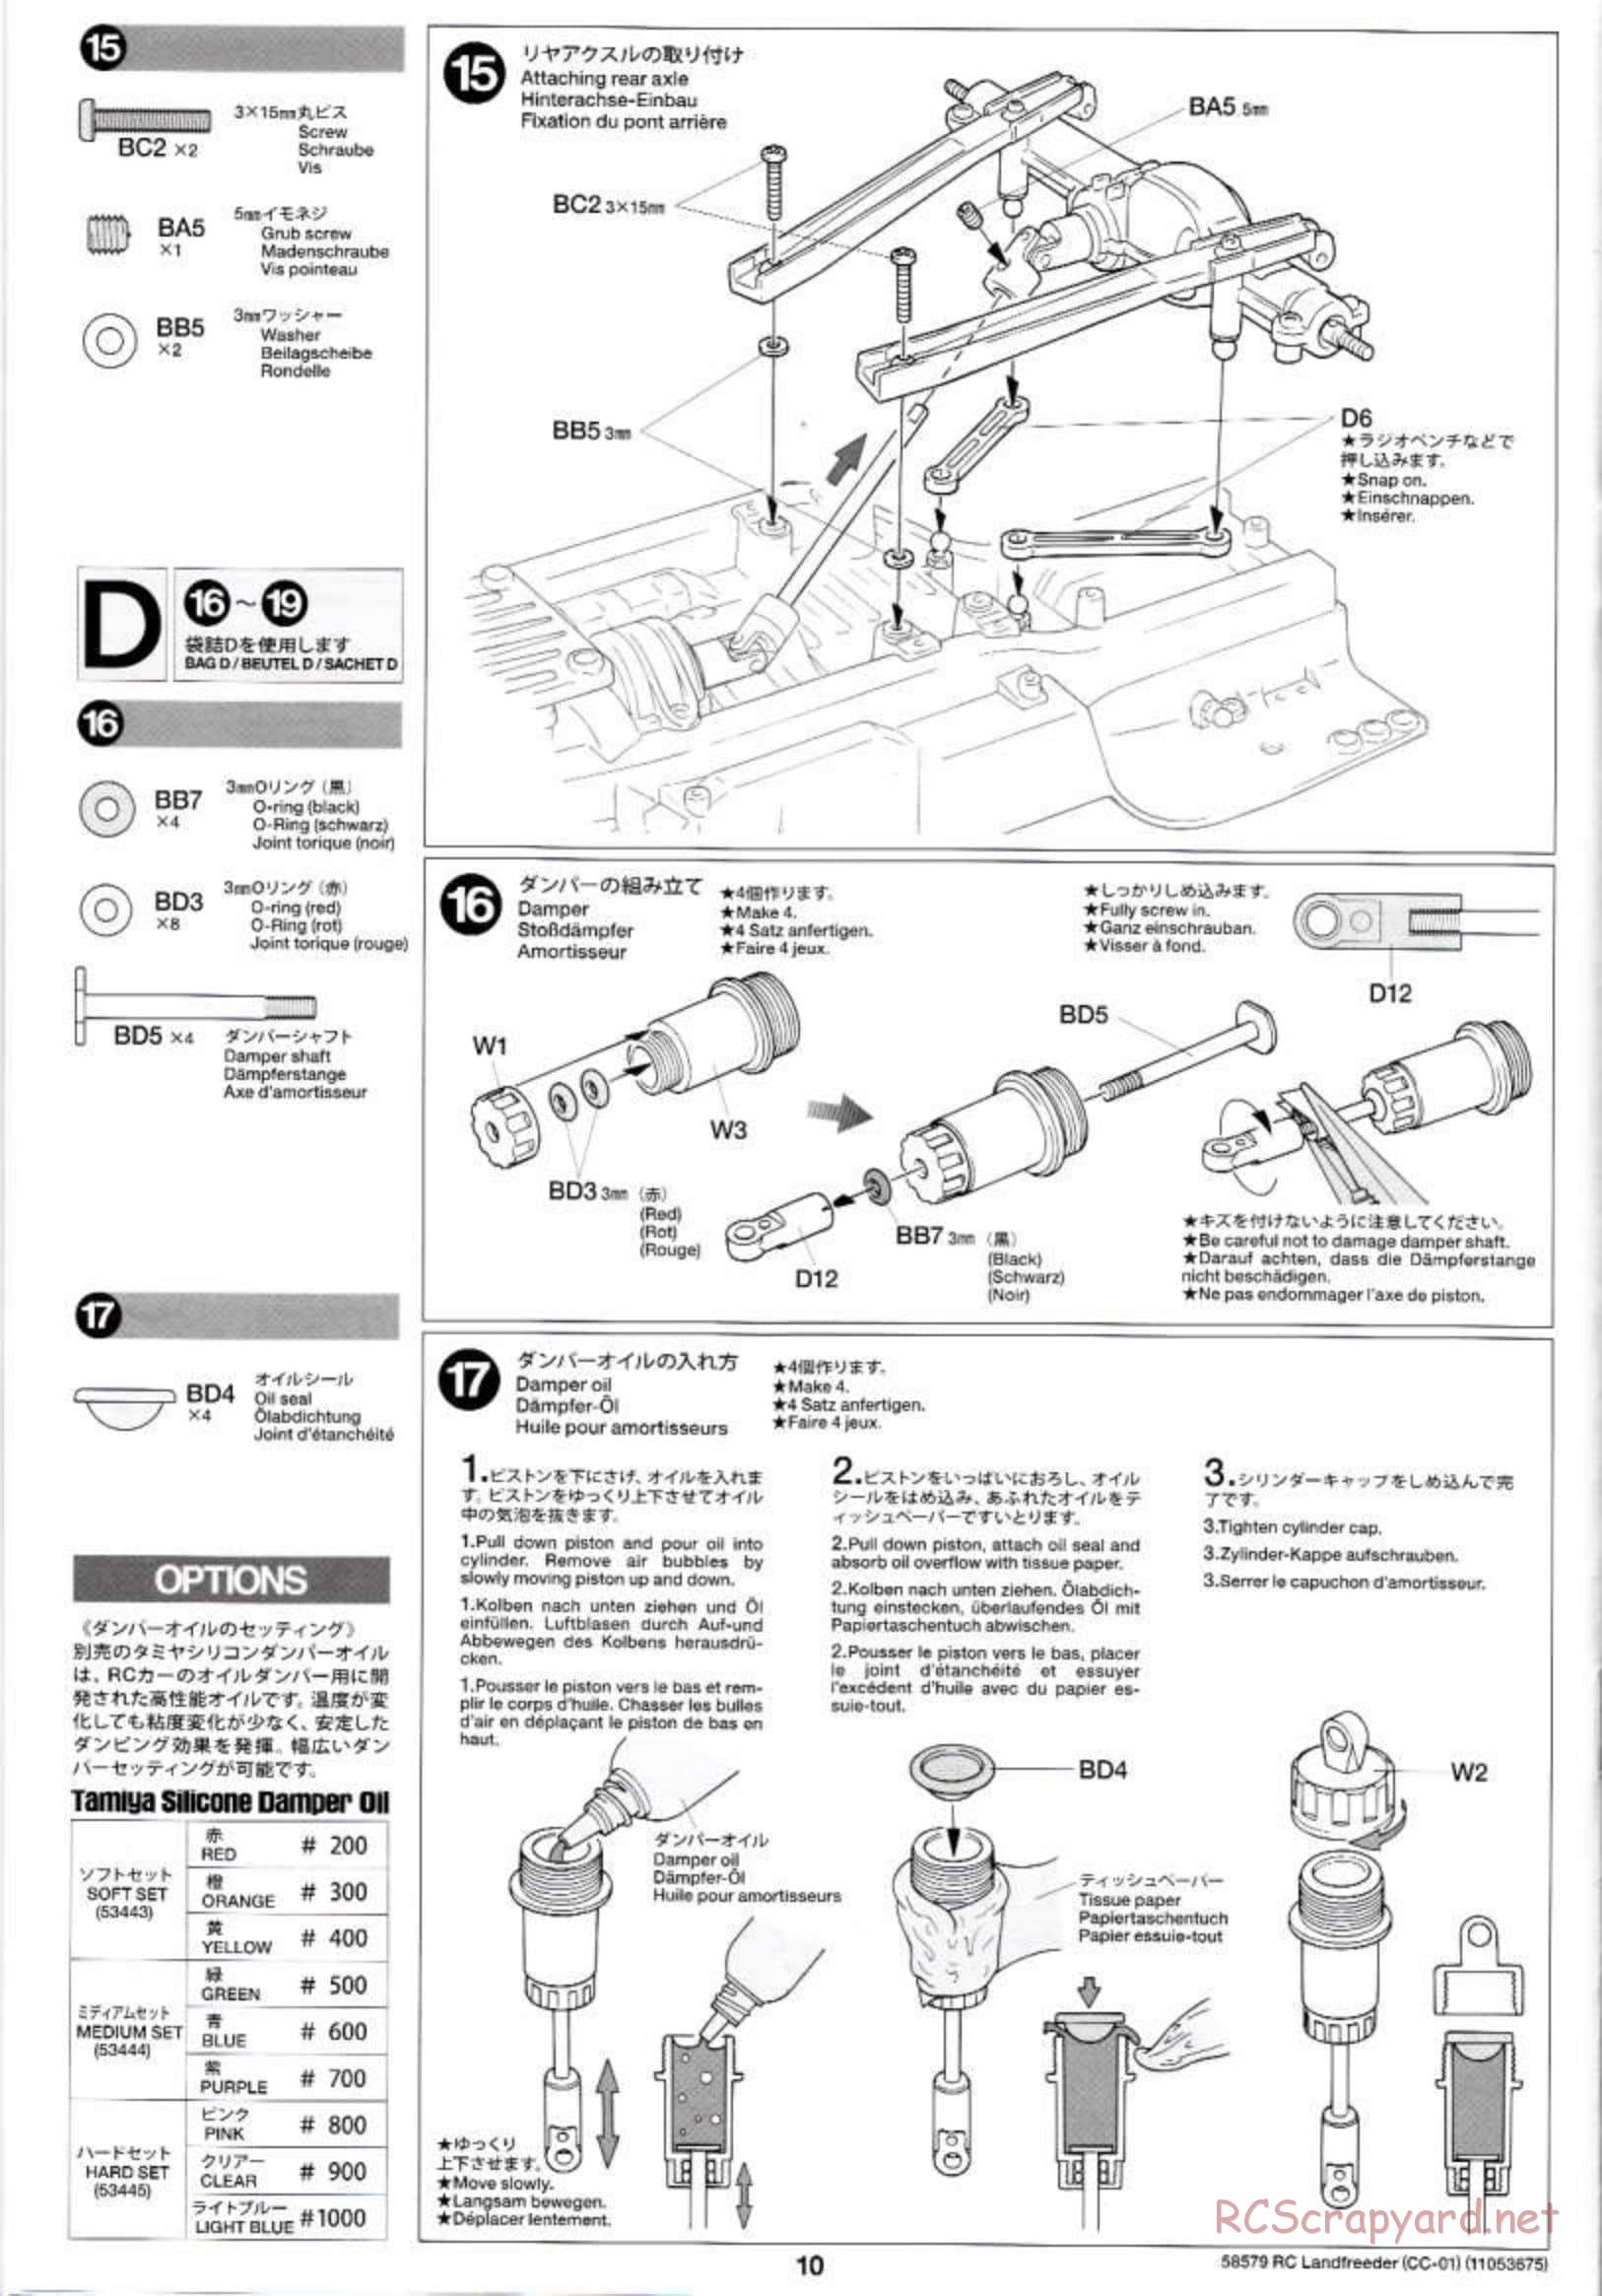 Tamiya - LandFreeder - CC-01 Chassis - Manual - Page 10